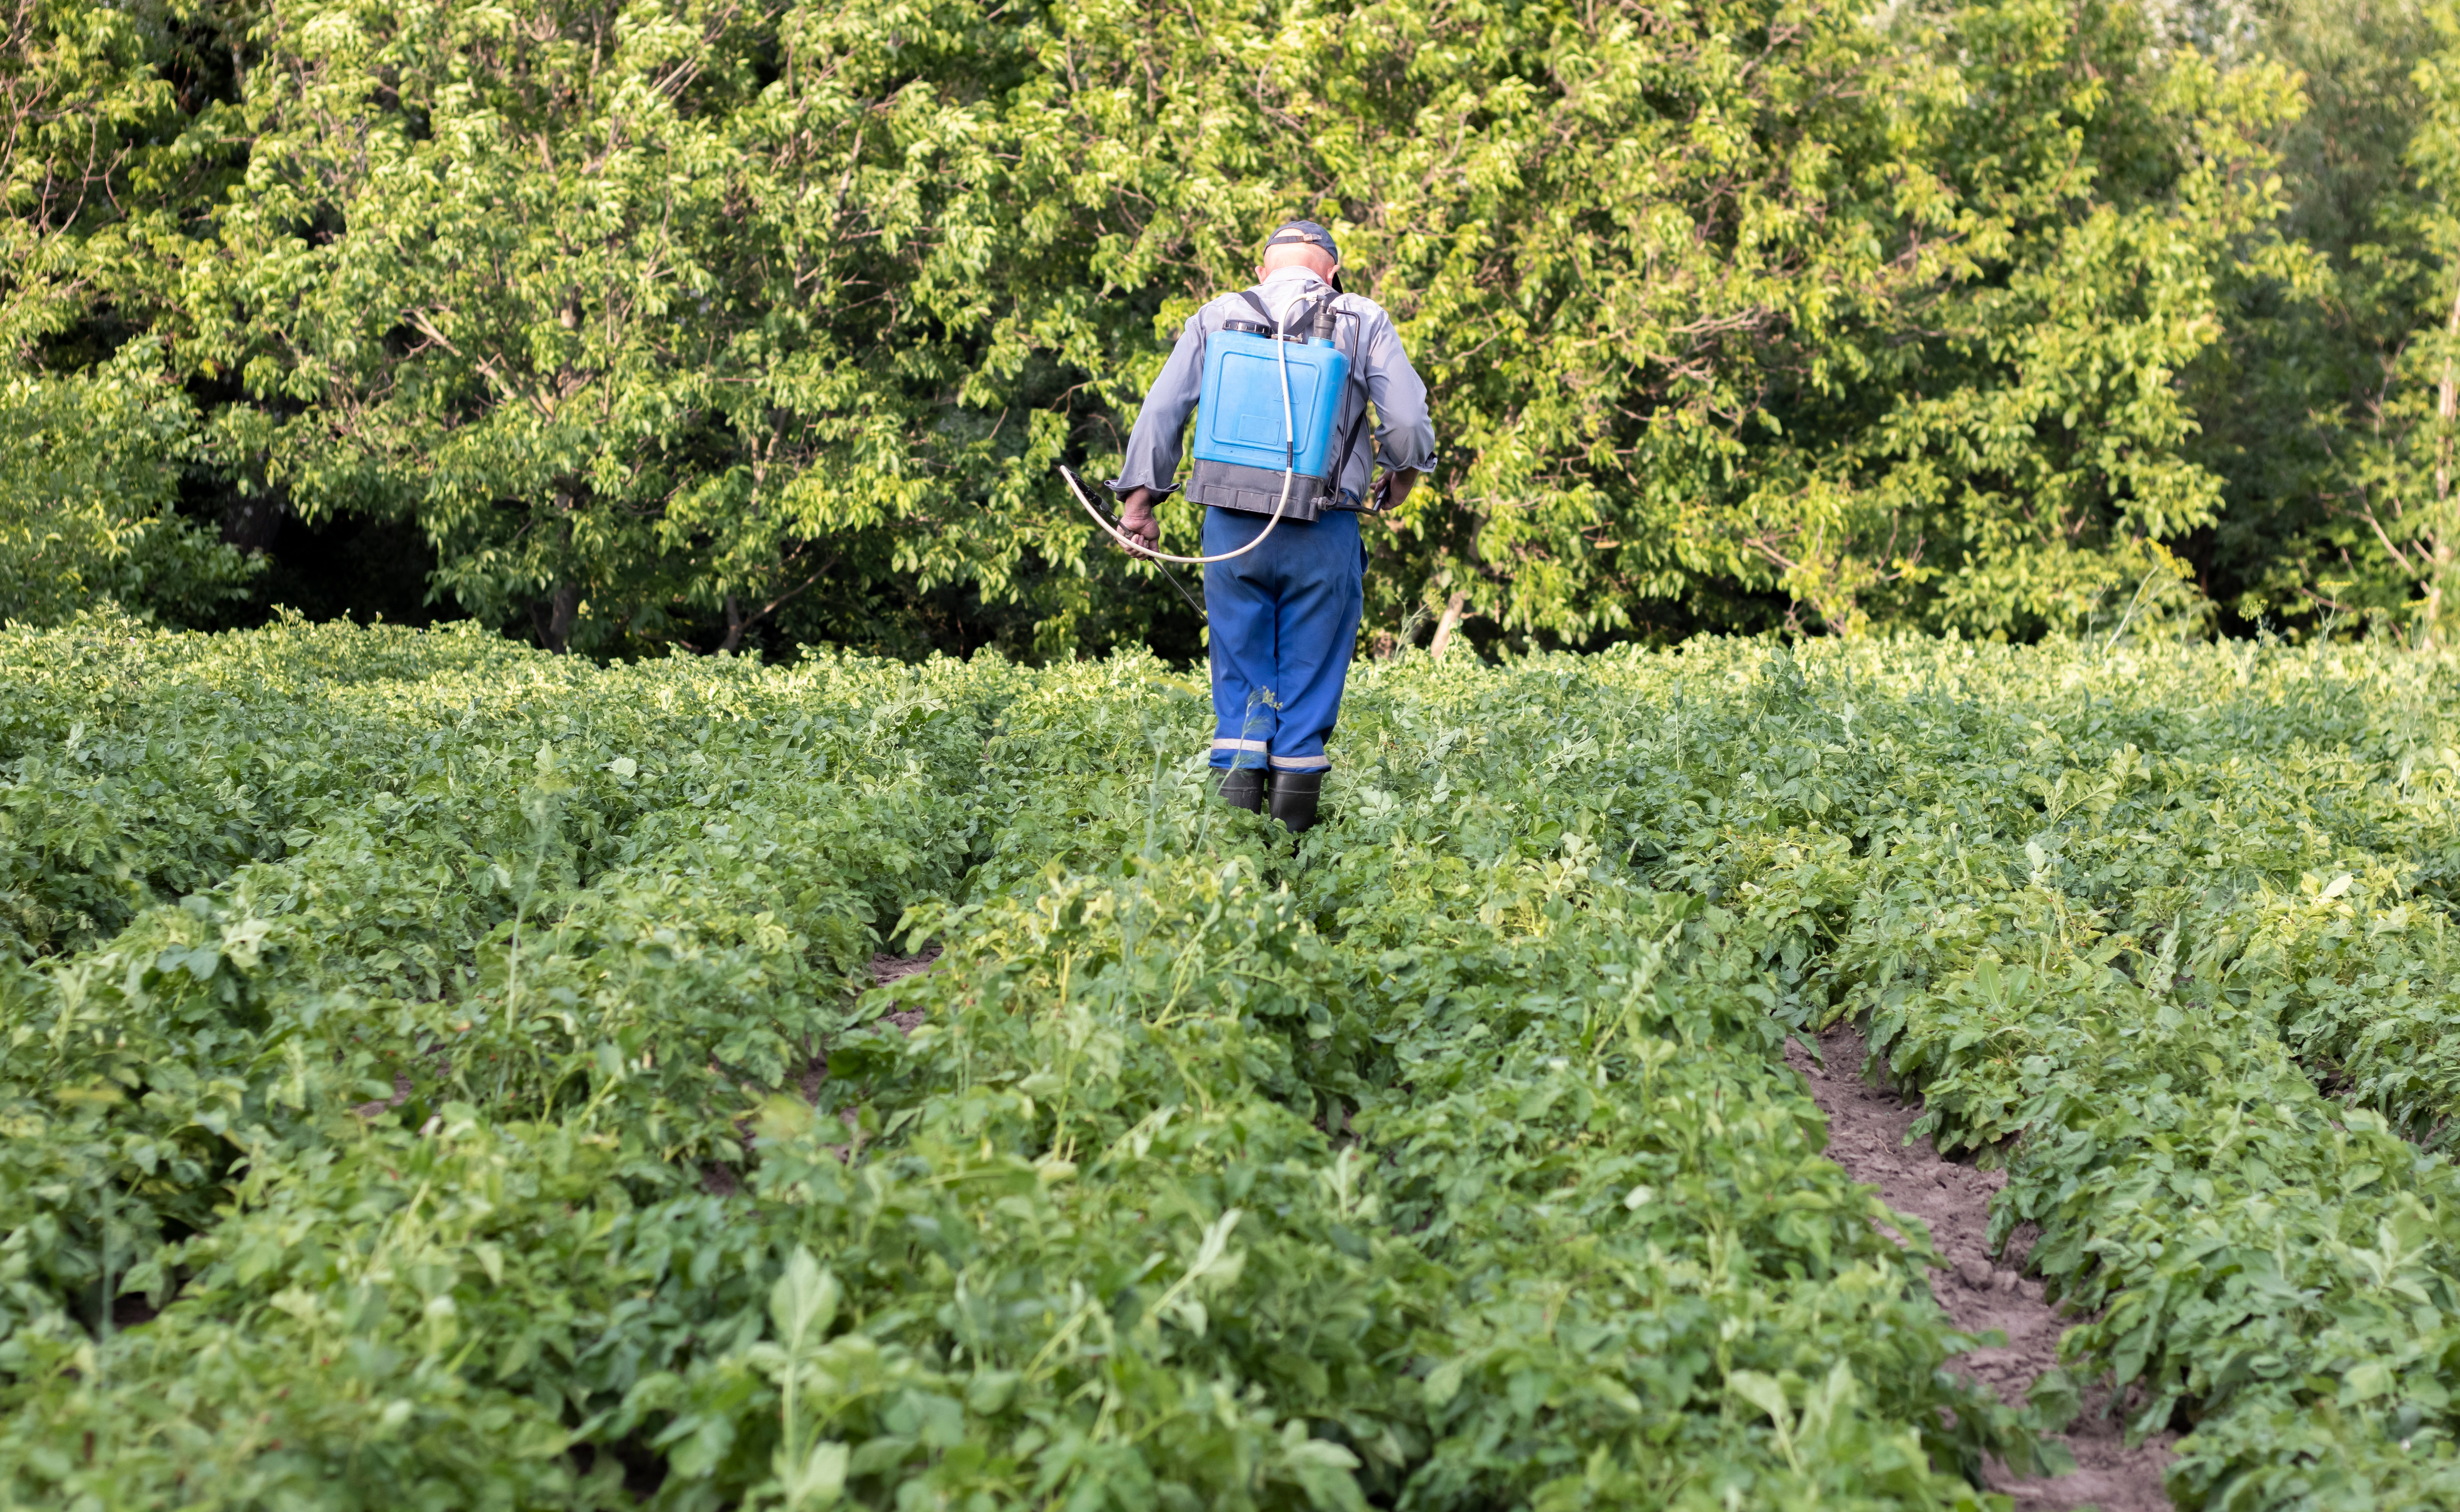 Spraying pesticide in field